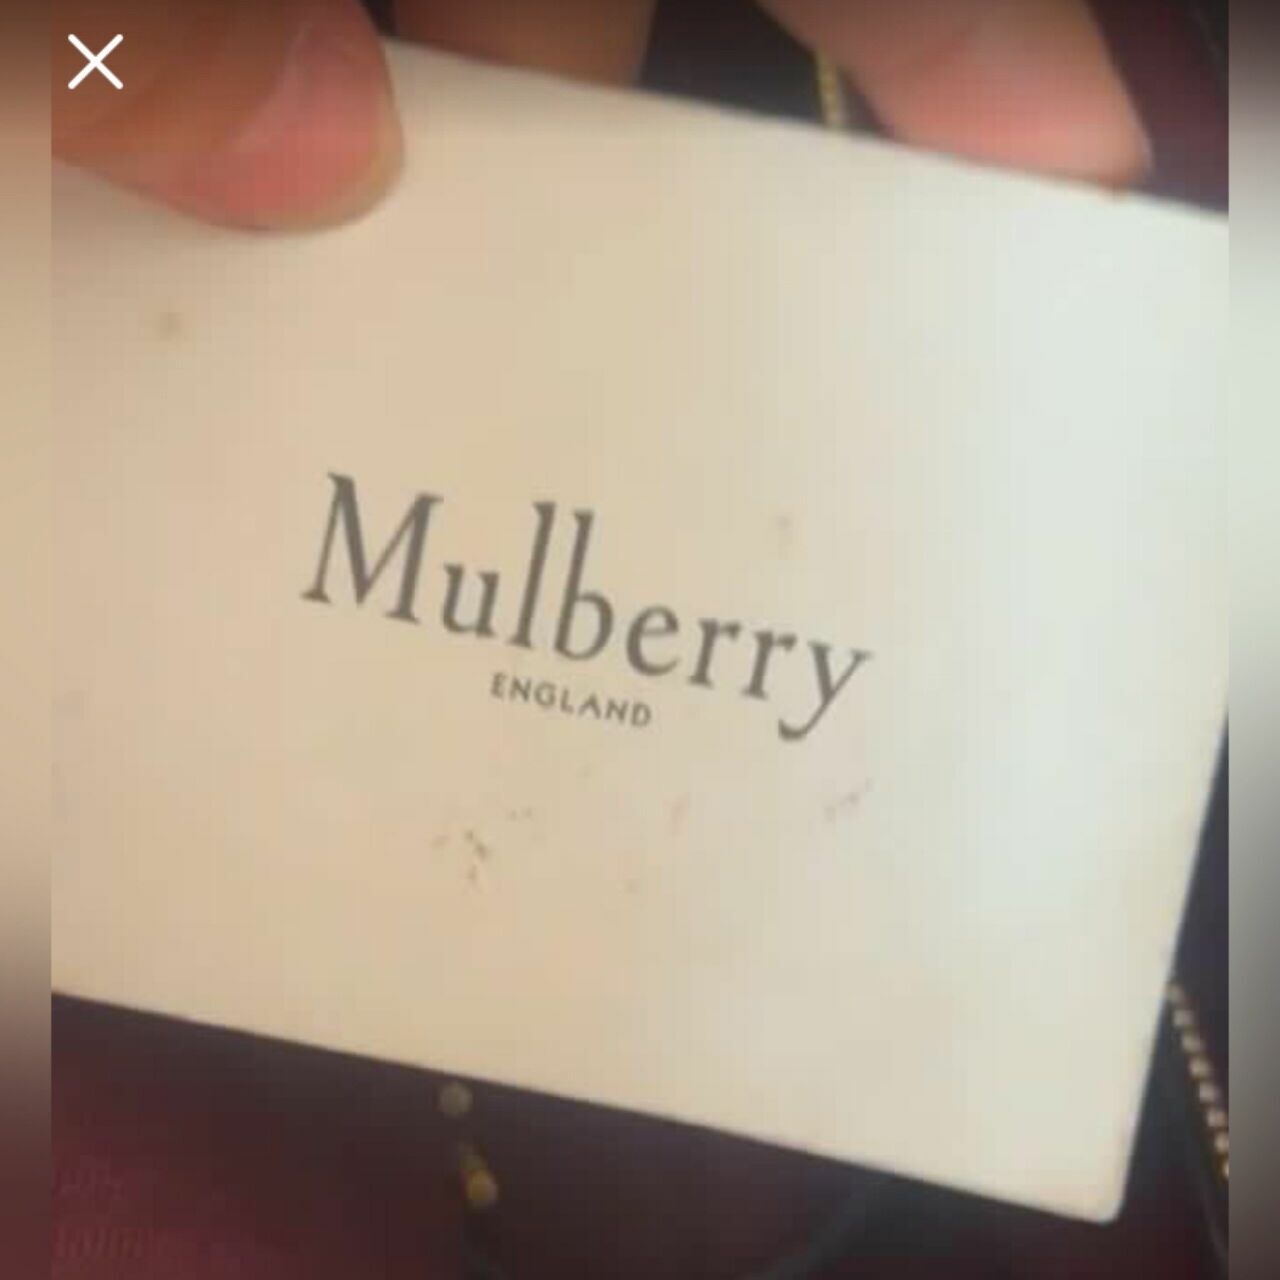  Mulberry Marylebone